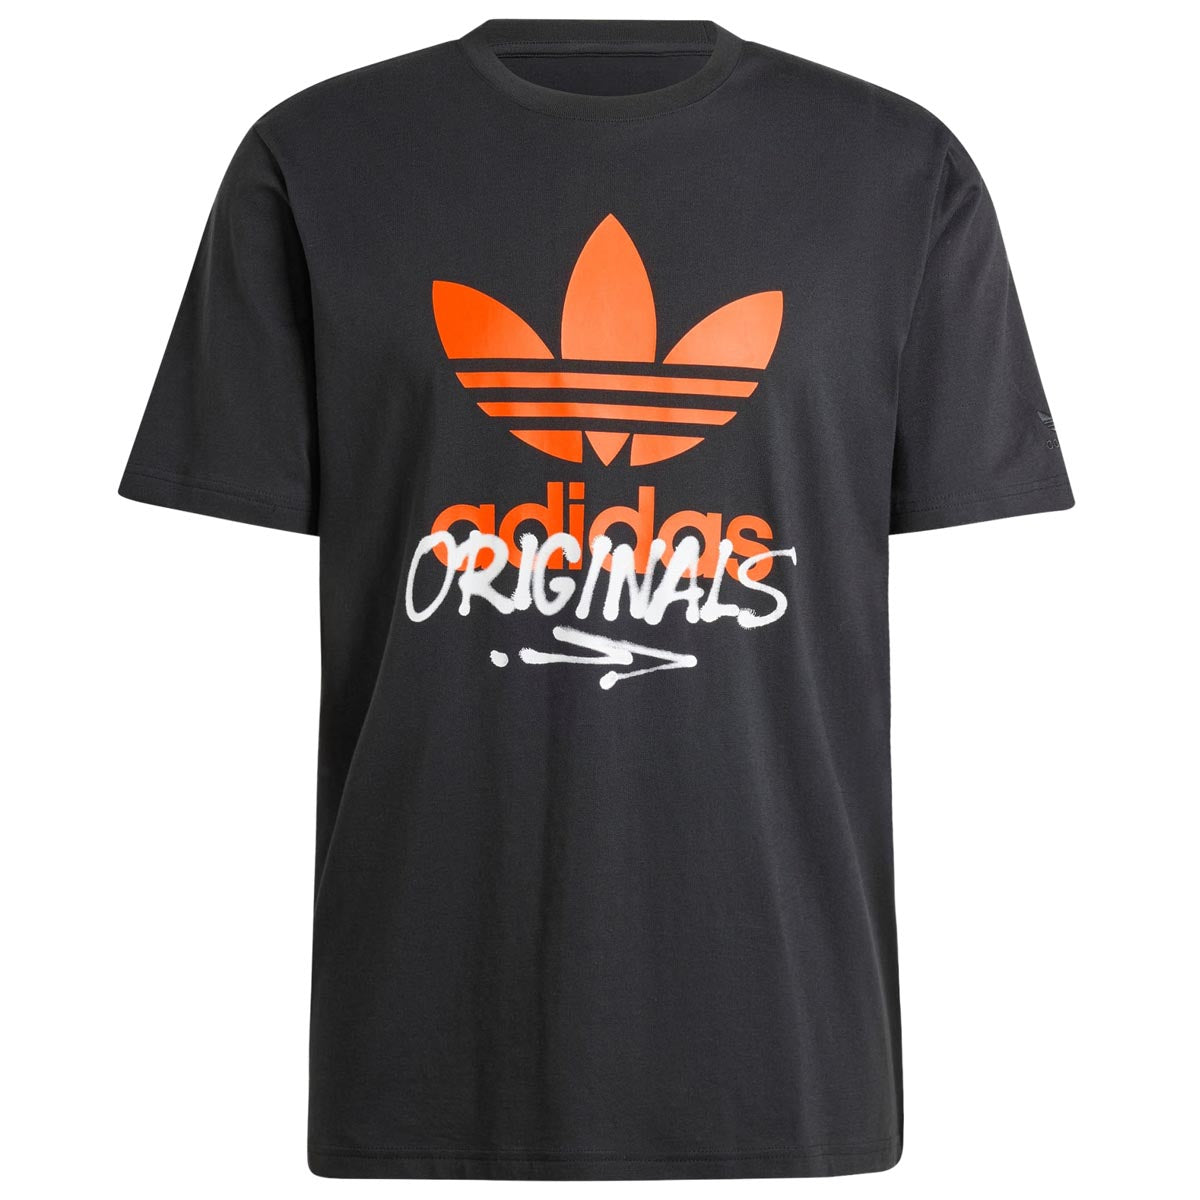 Adidas Street T-Shirt - Black image 1